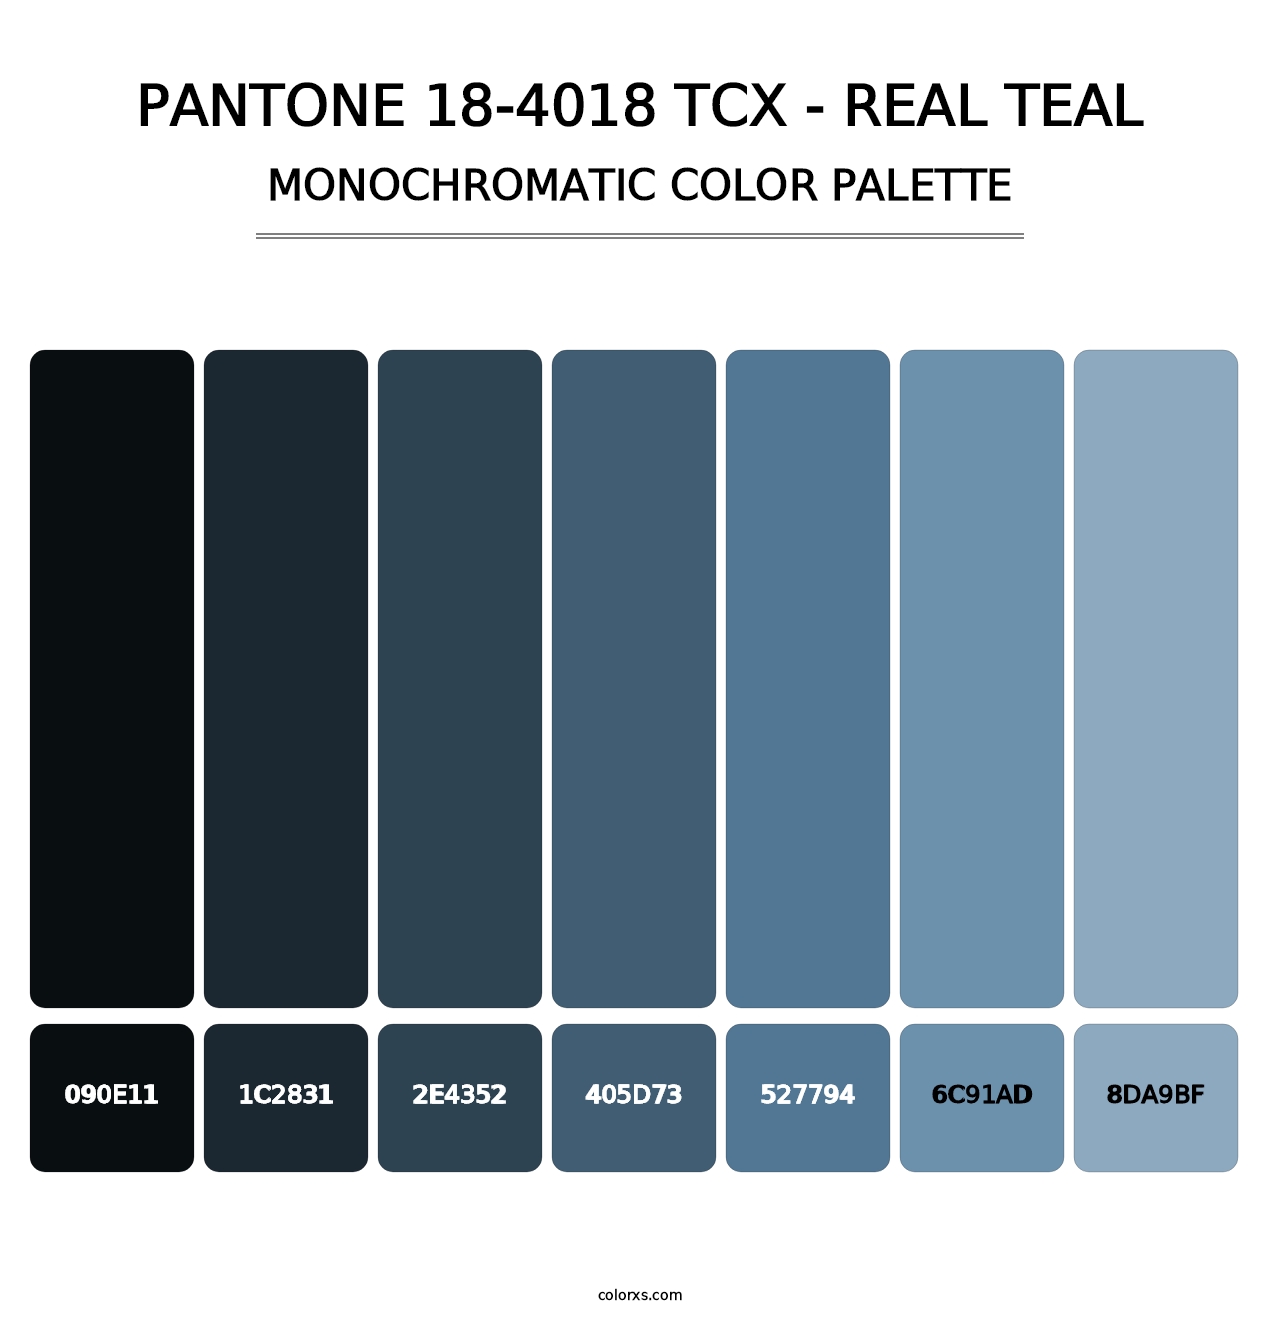 PANTONE 18-4018 TCX - Real Teal - Monochromatic Color Palette